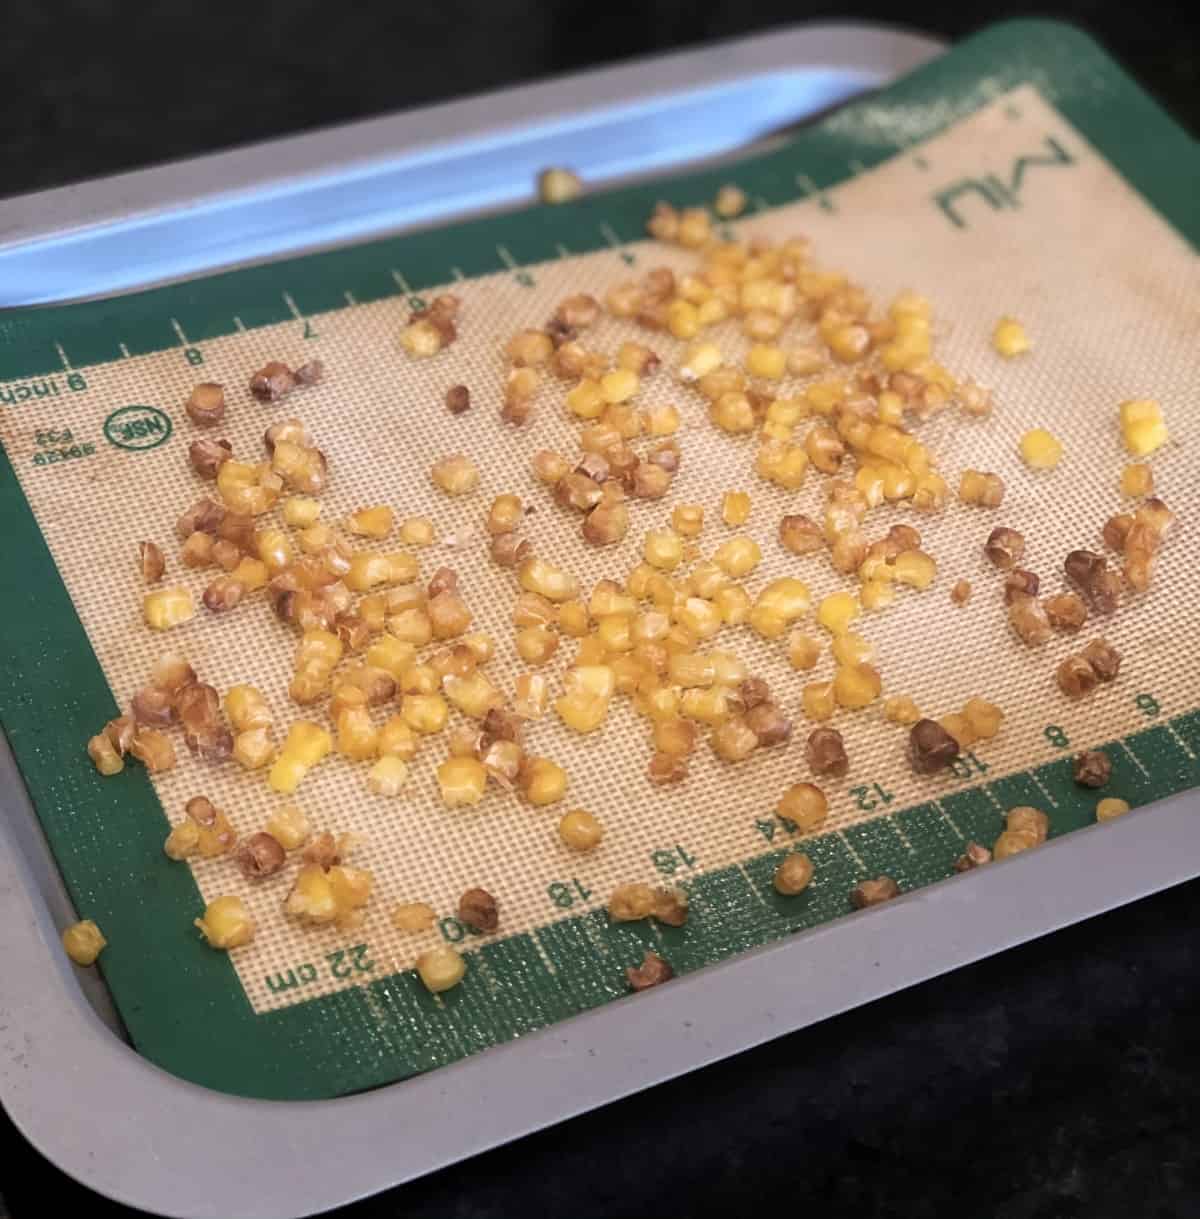 Roasted corn kernels on silat lined baking sheet.